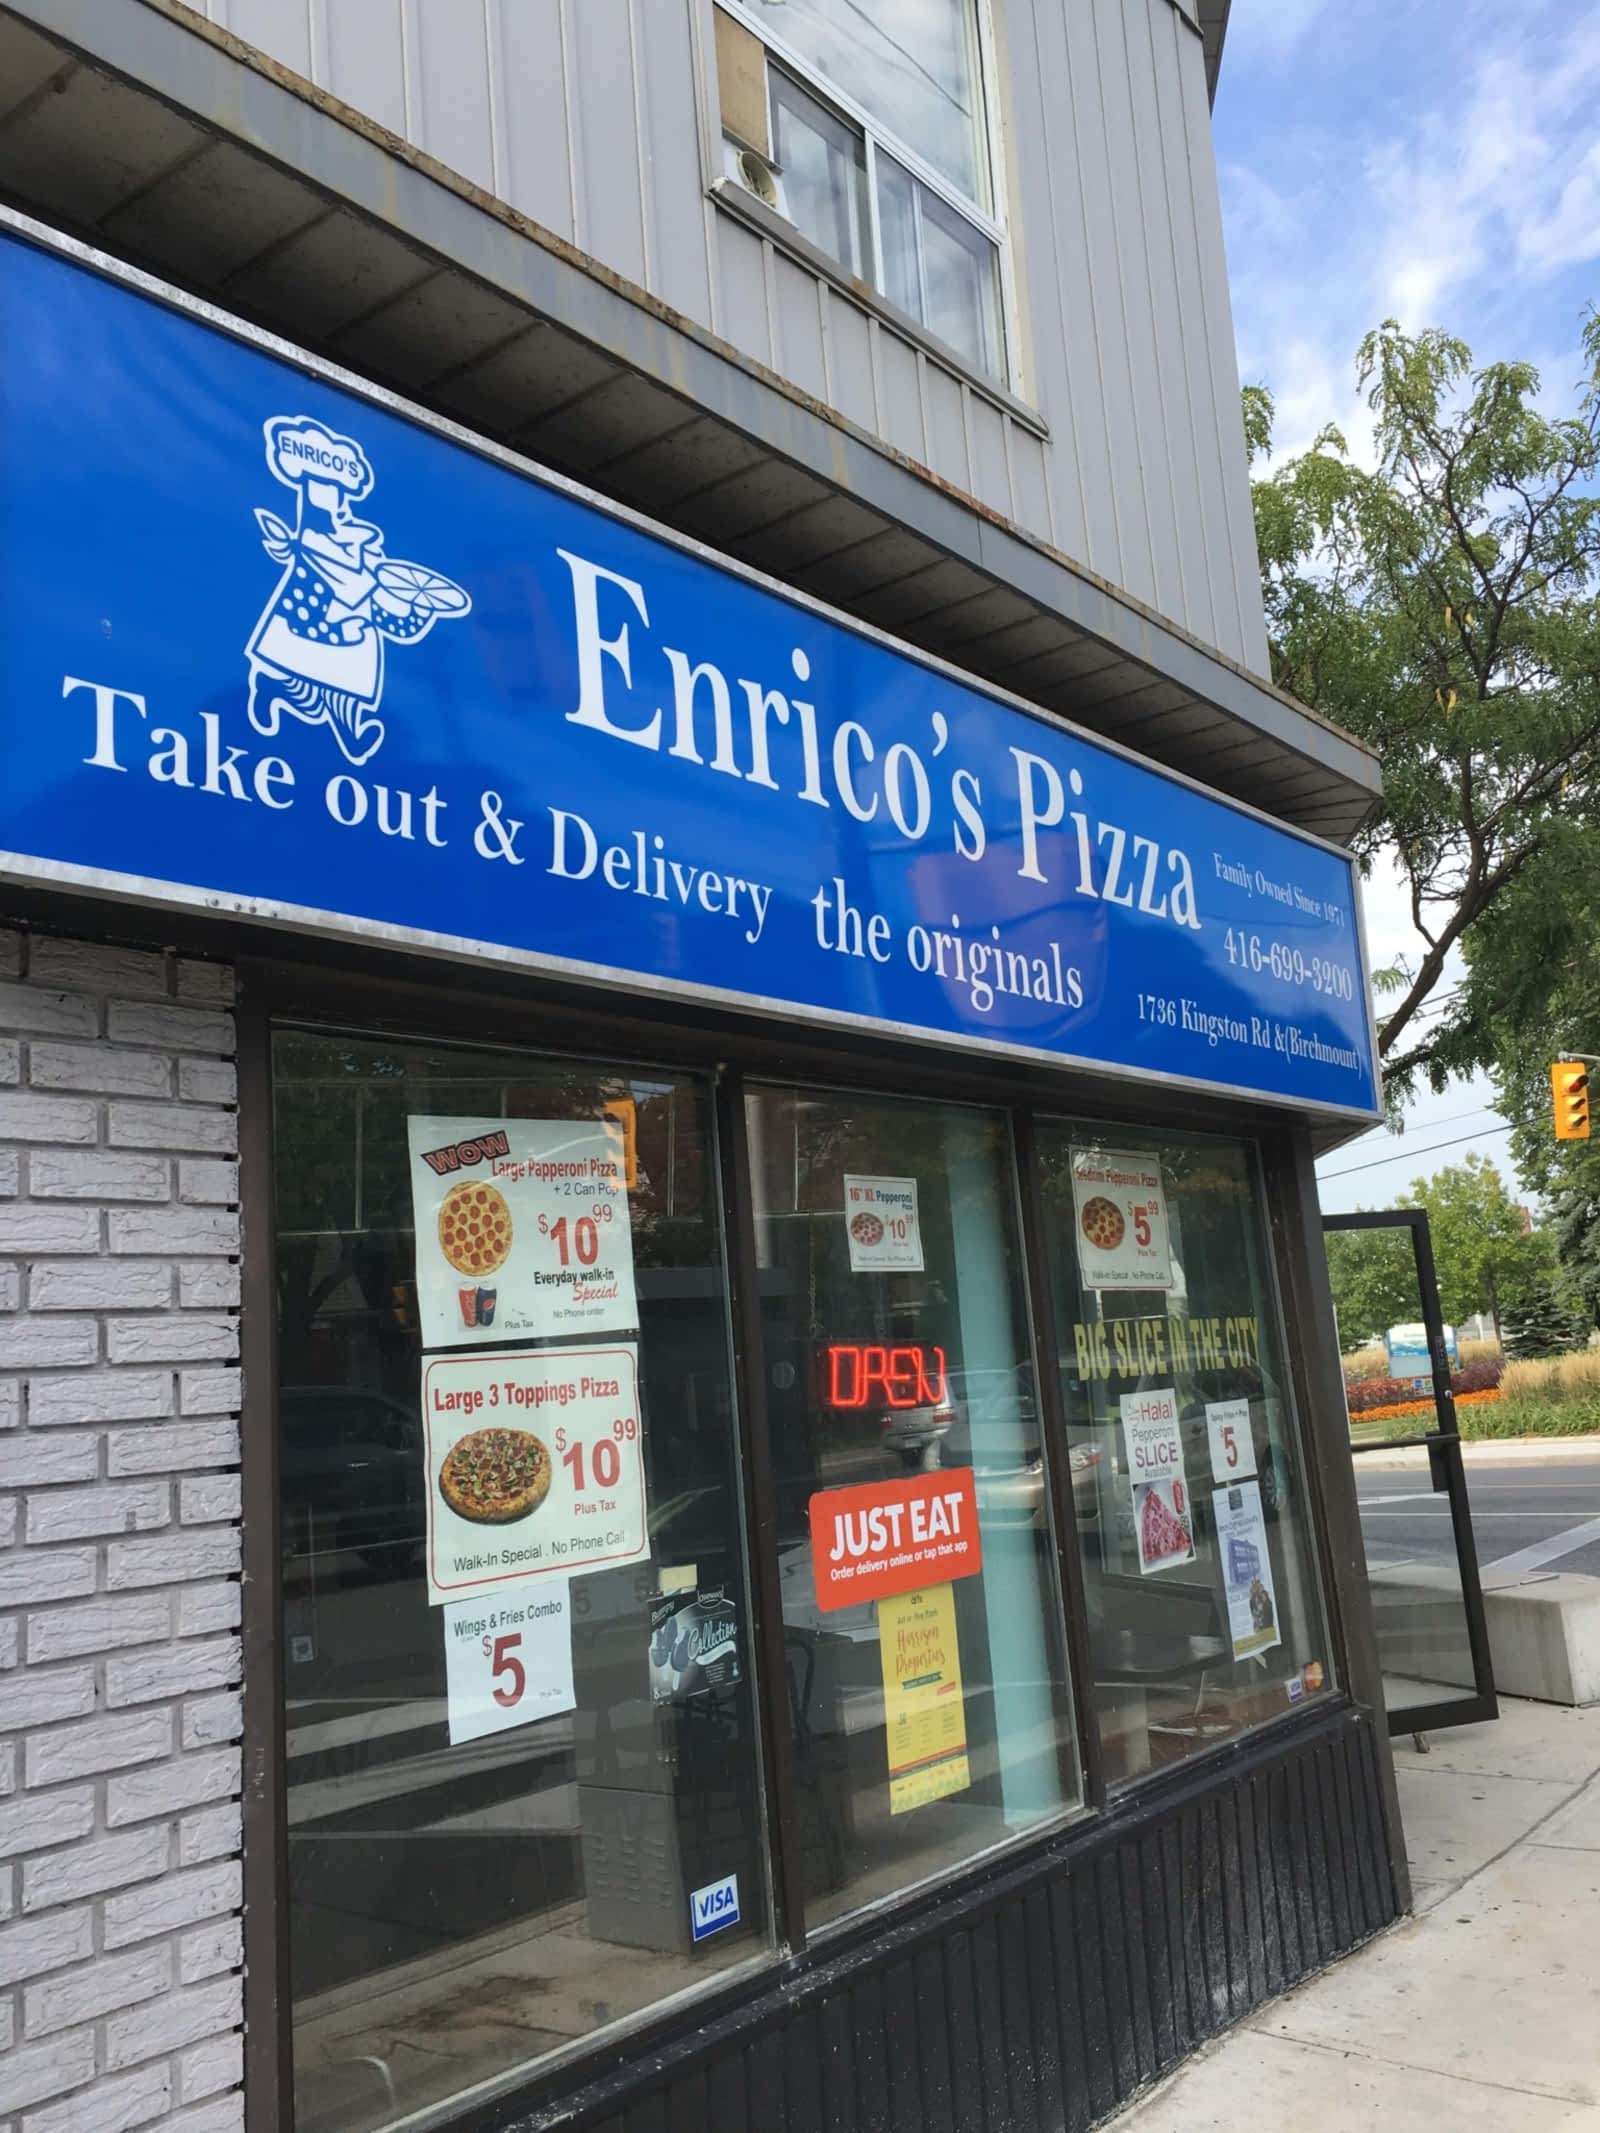 enrico-s-pizza-storefront-1.jpg